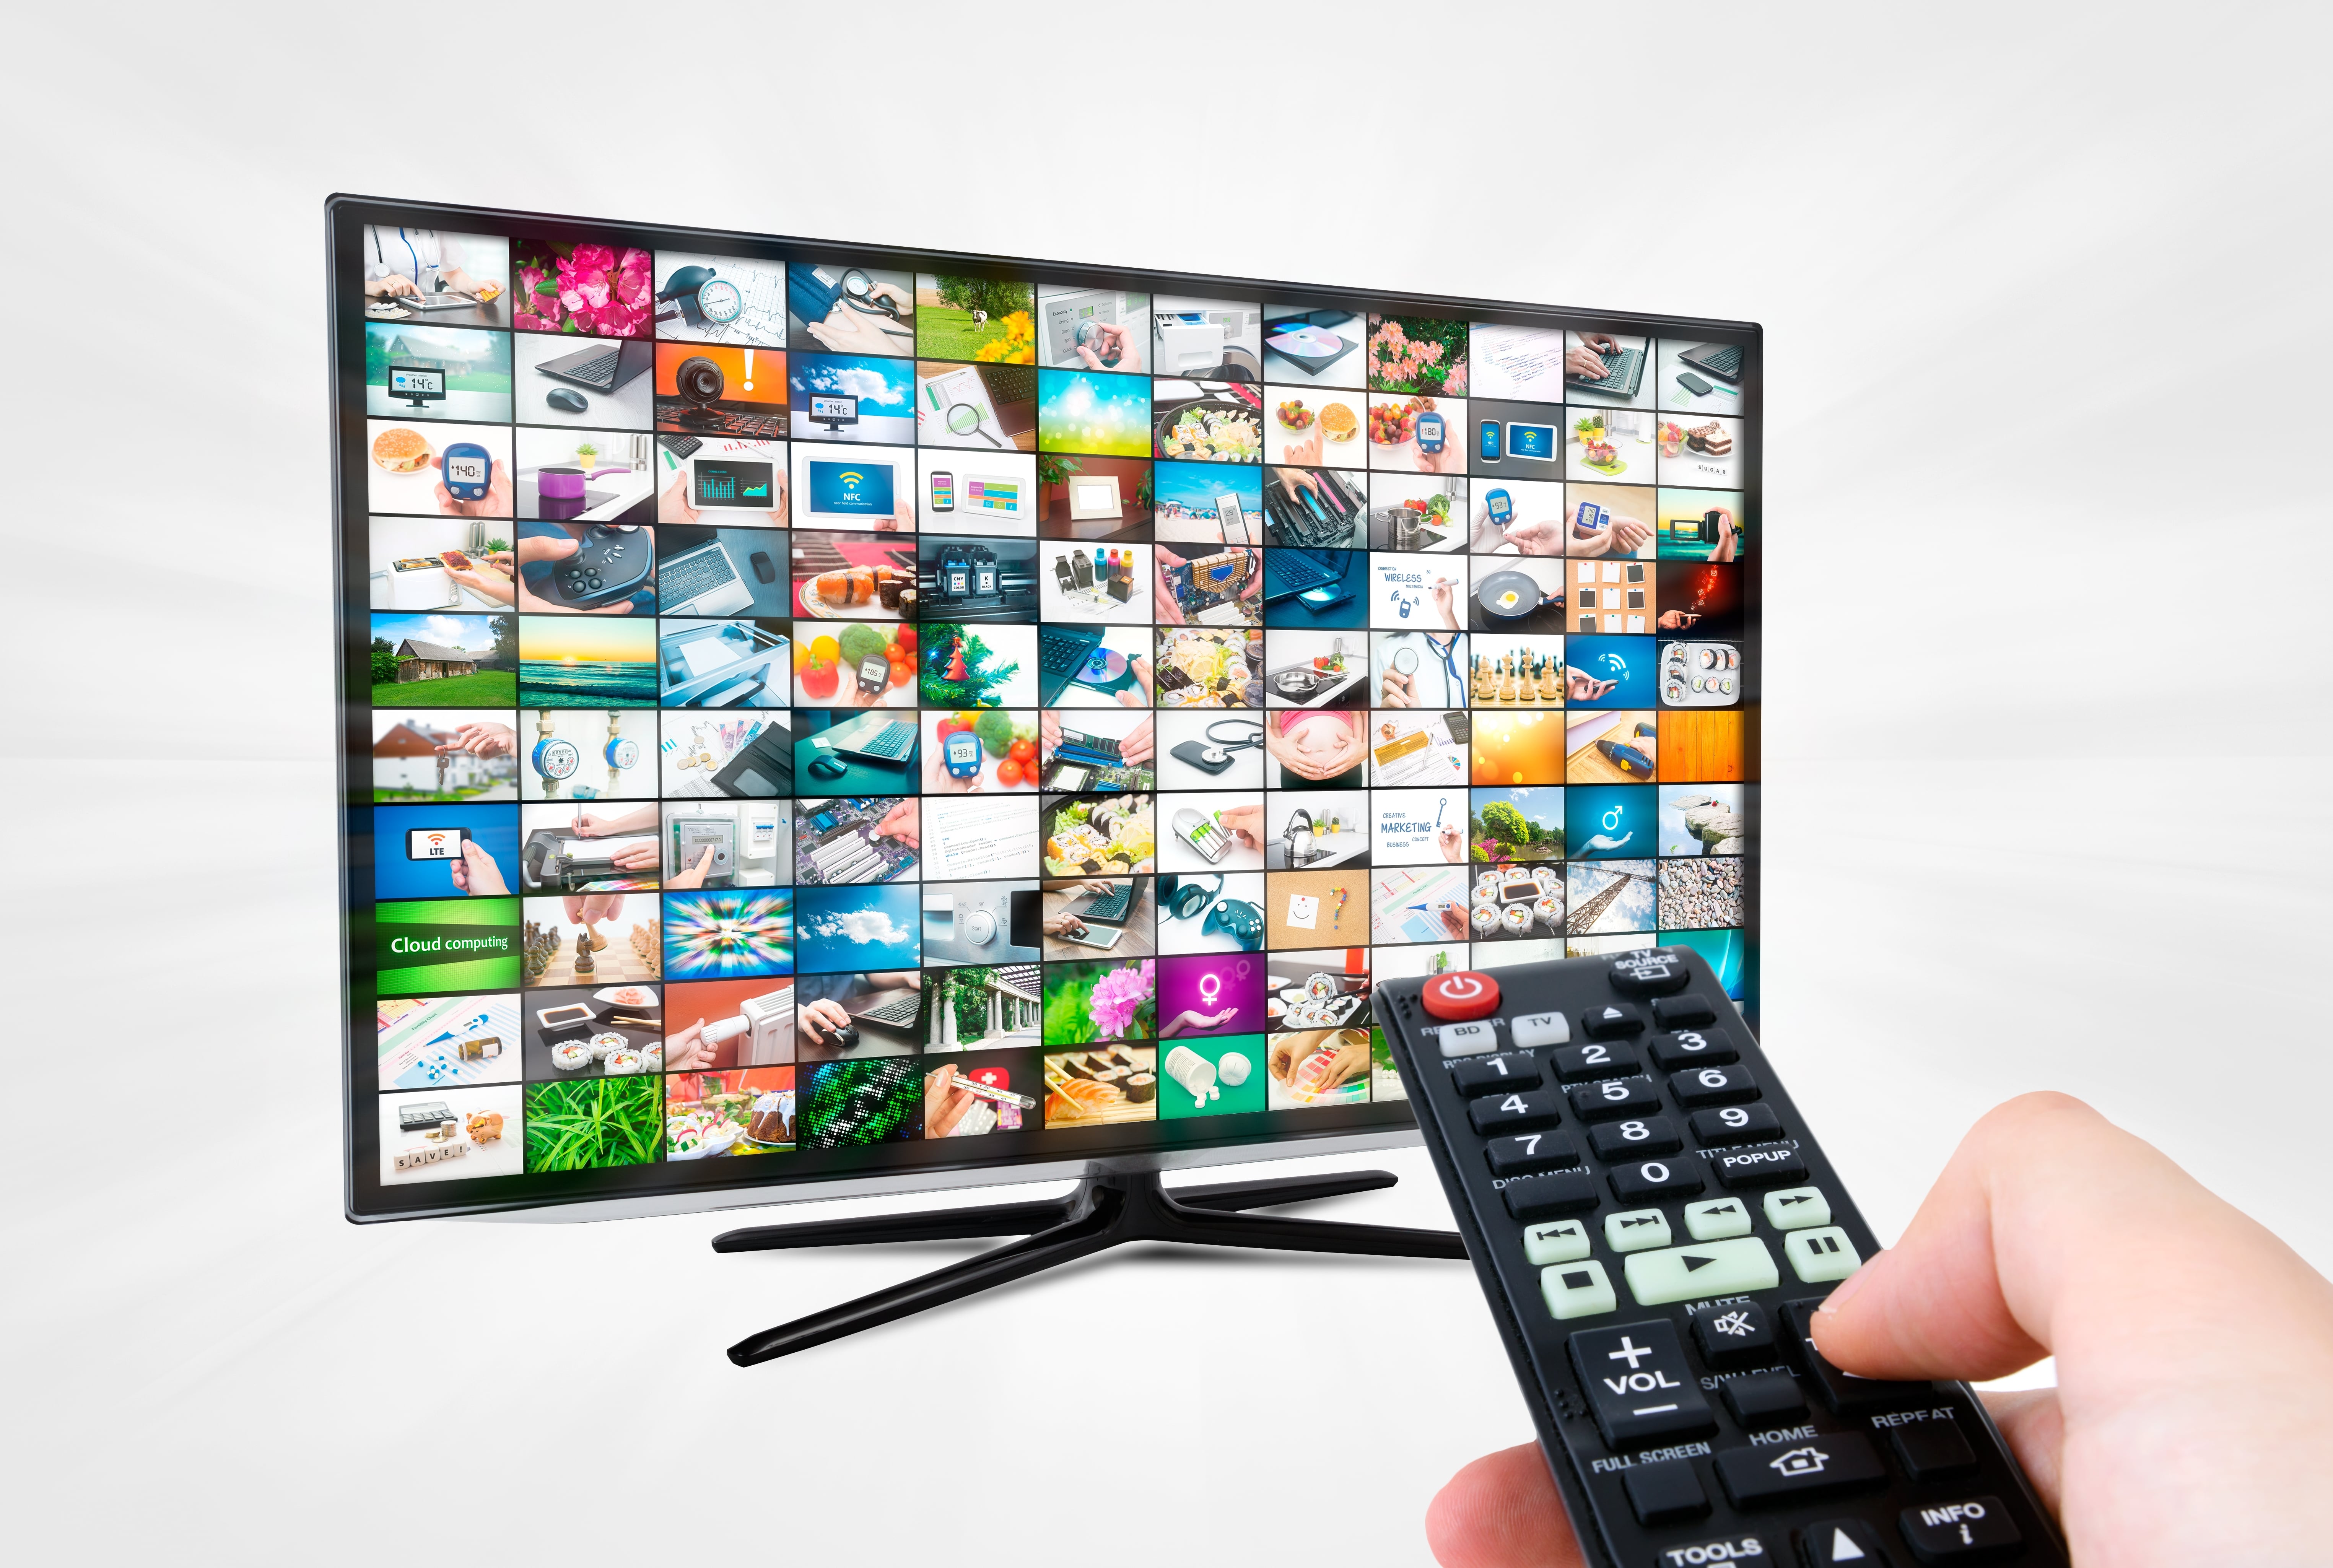 How to Update Apps on Panasonic Smart TV - Smart TV Tricks